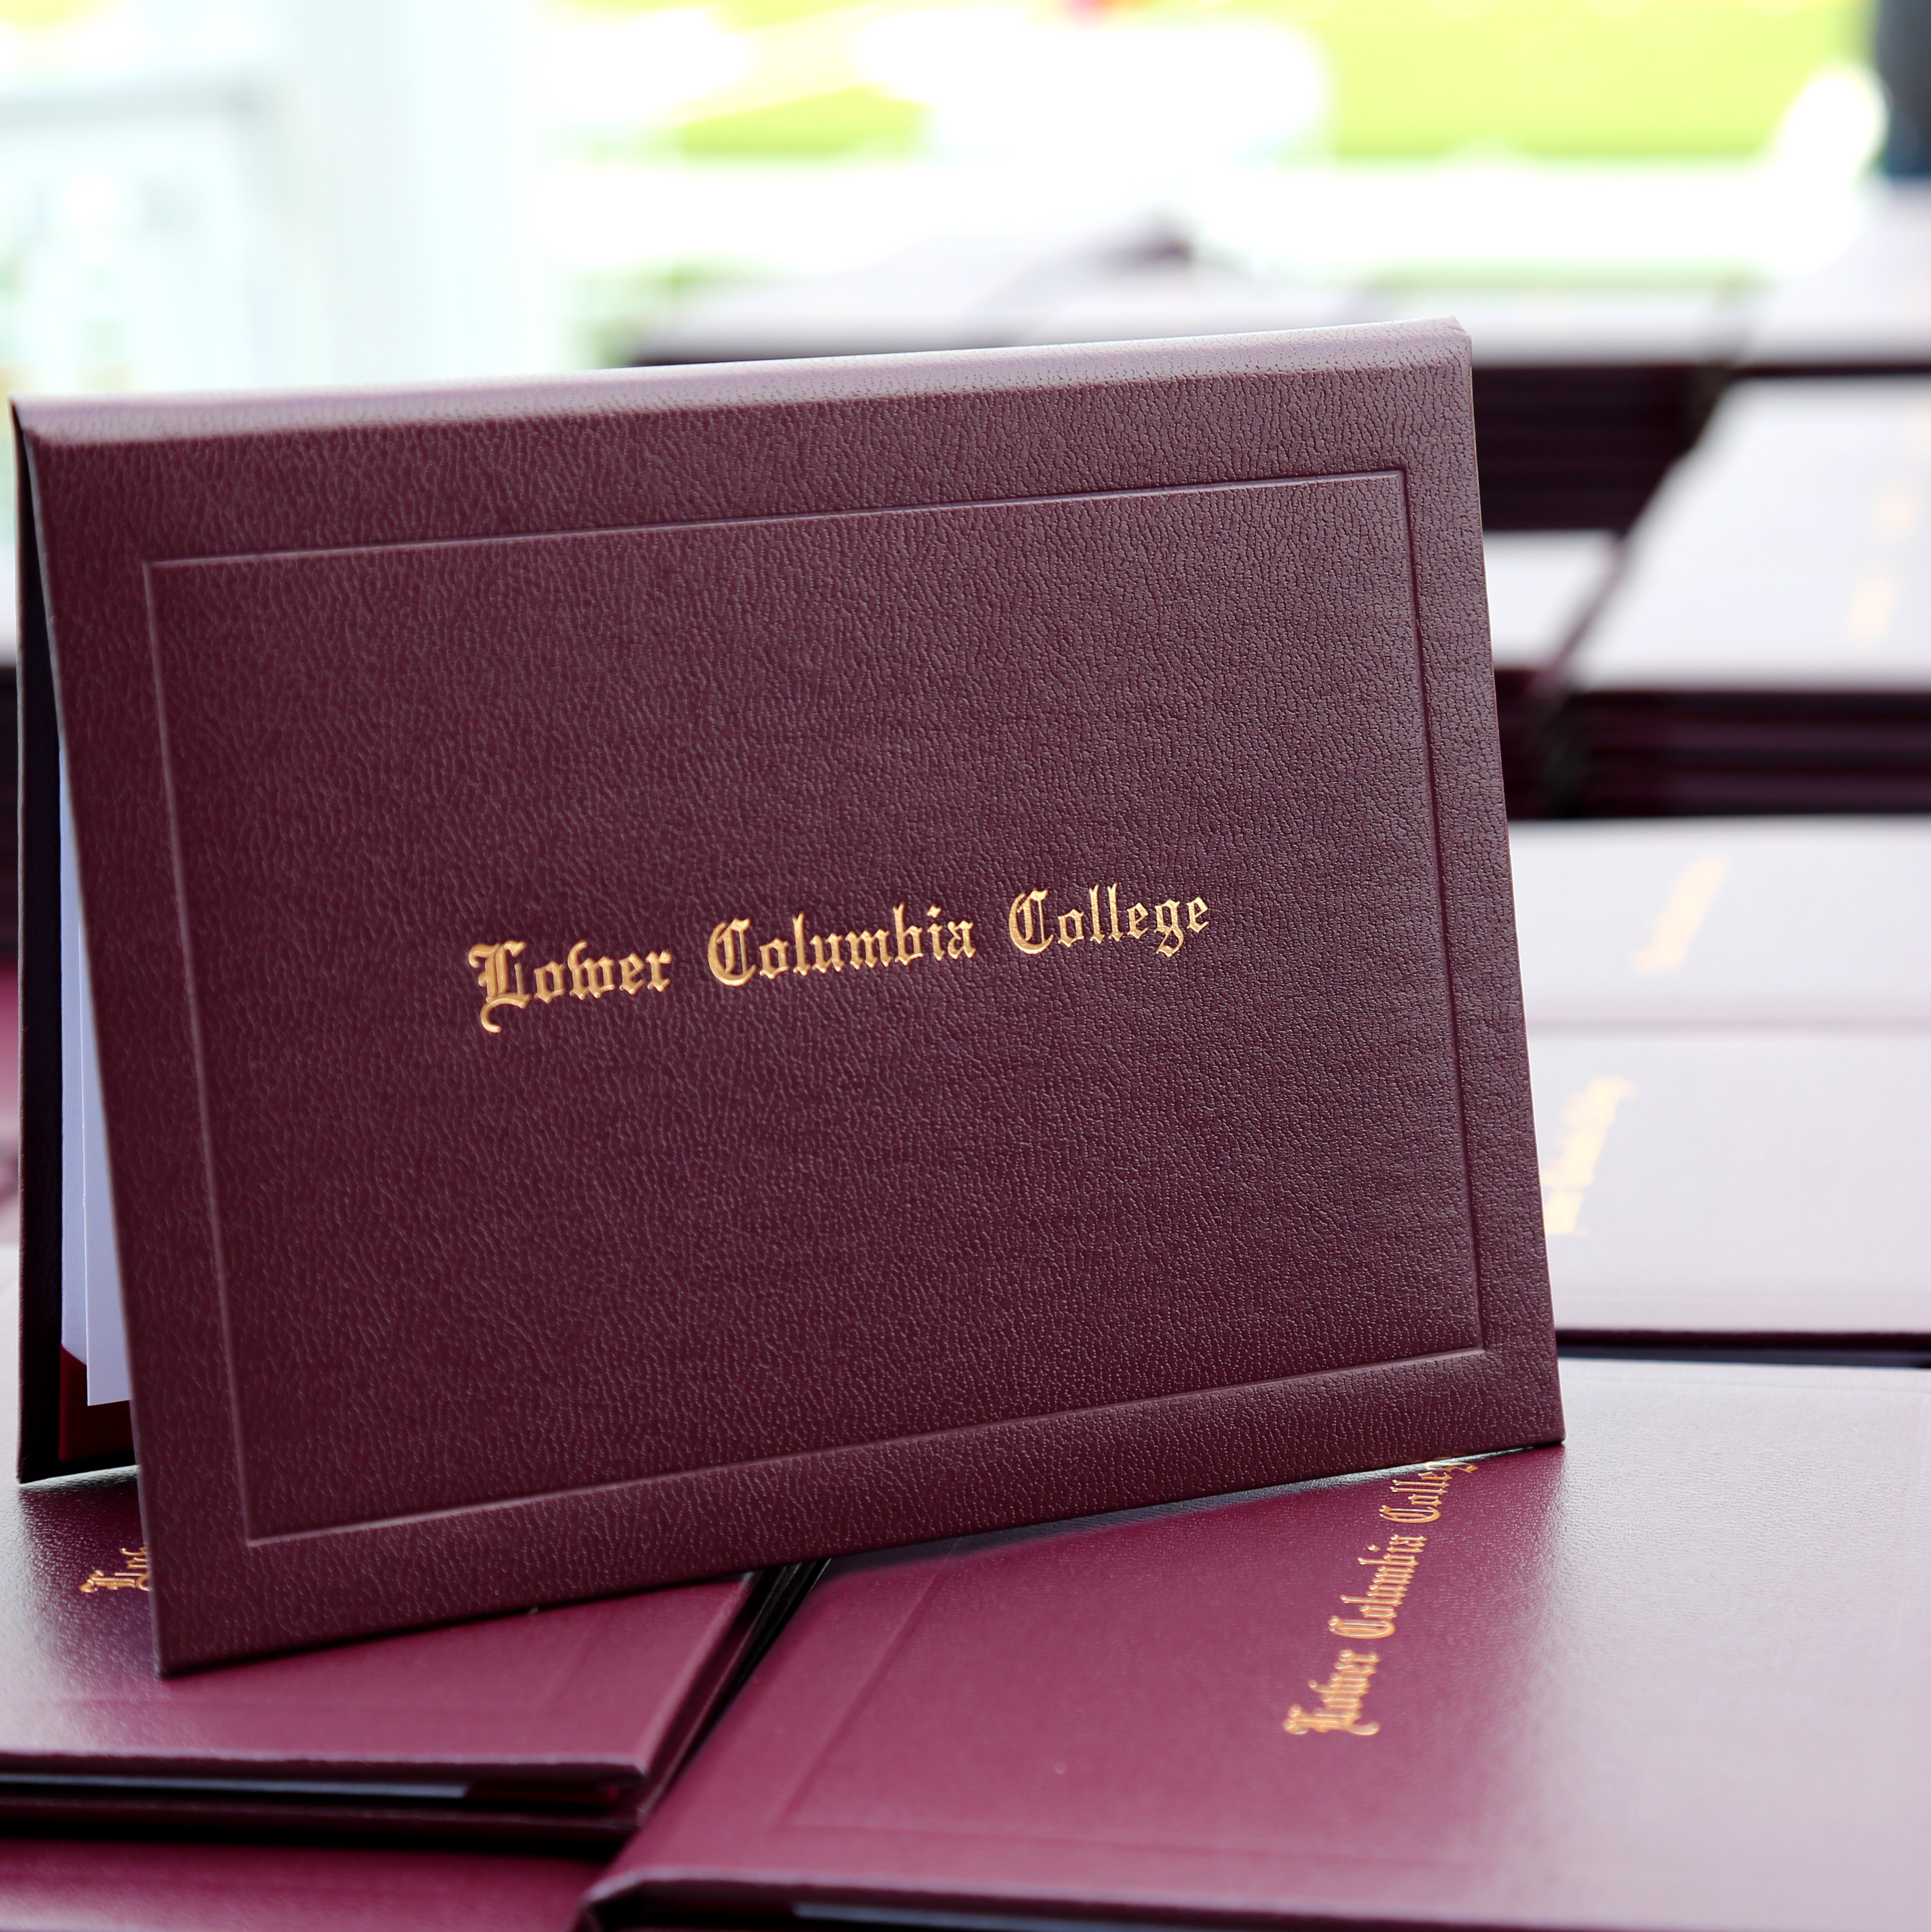 Lower Columbia College Diplomas